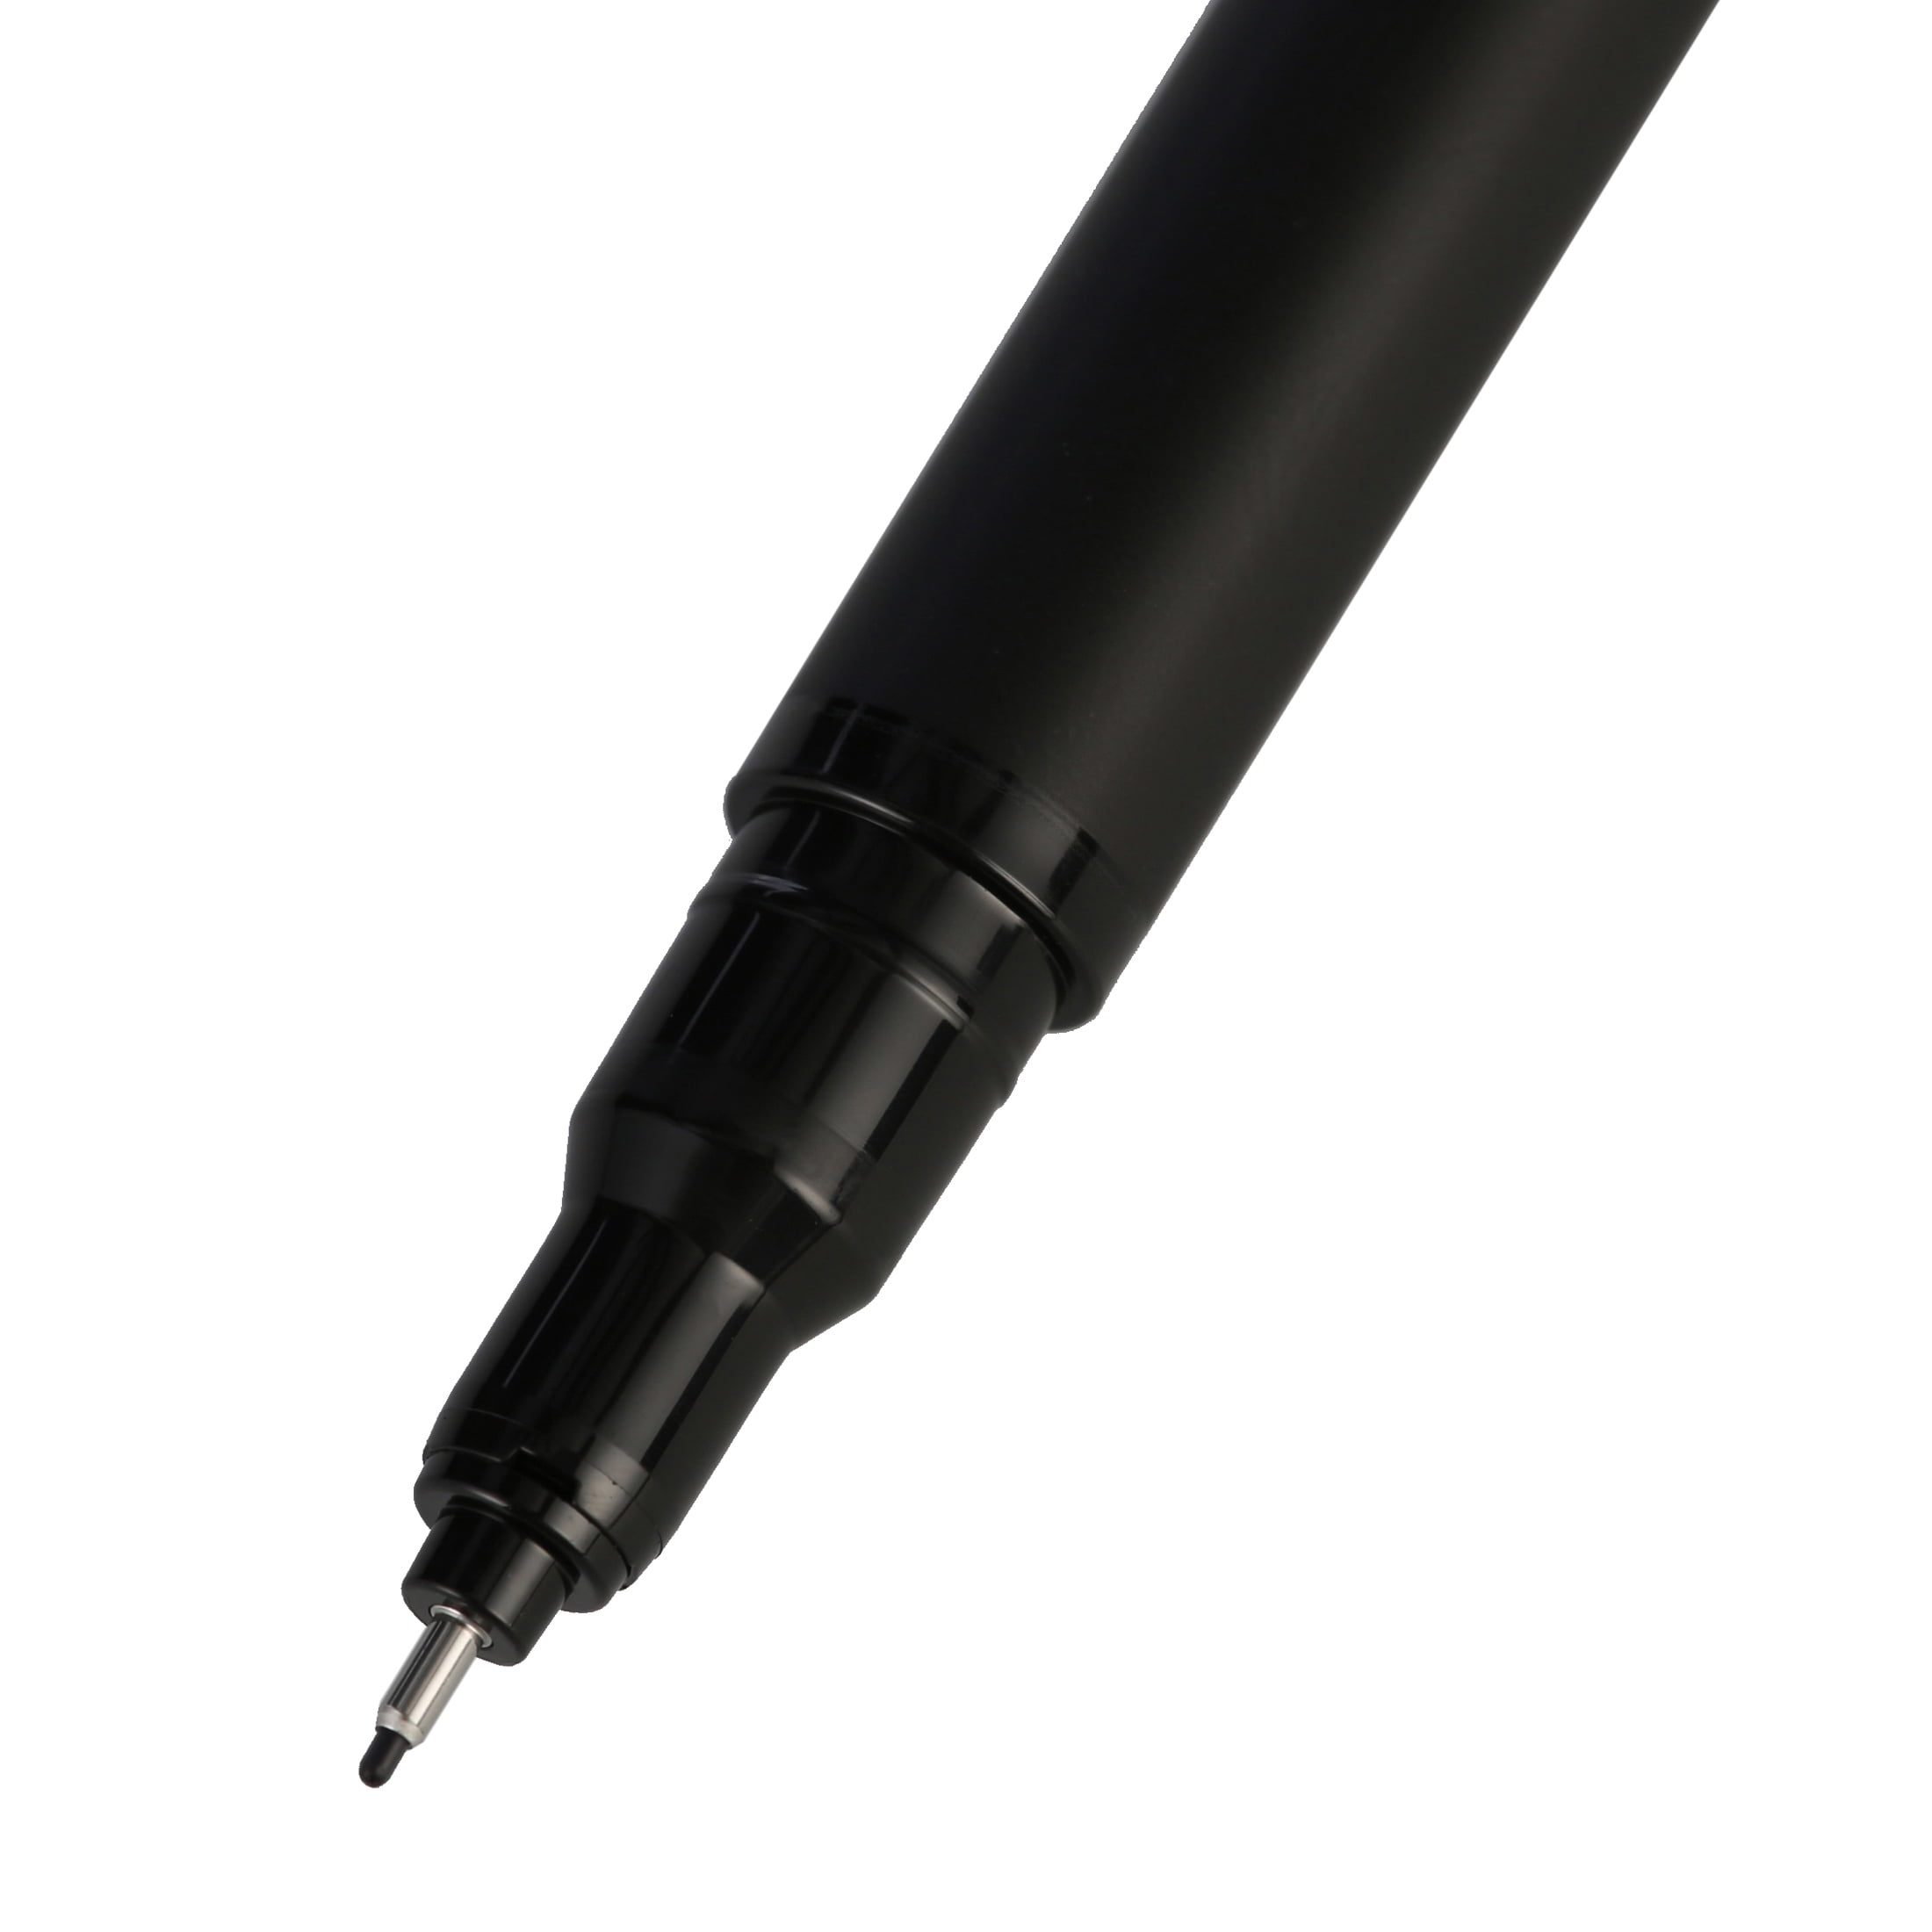 Sharpie Fine Pen Black  Hy-Vee Aisles Online Grocery Shopping